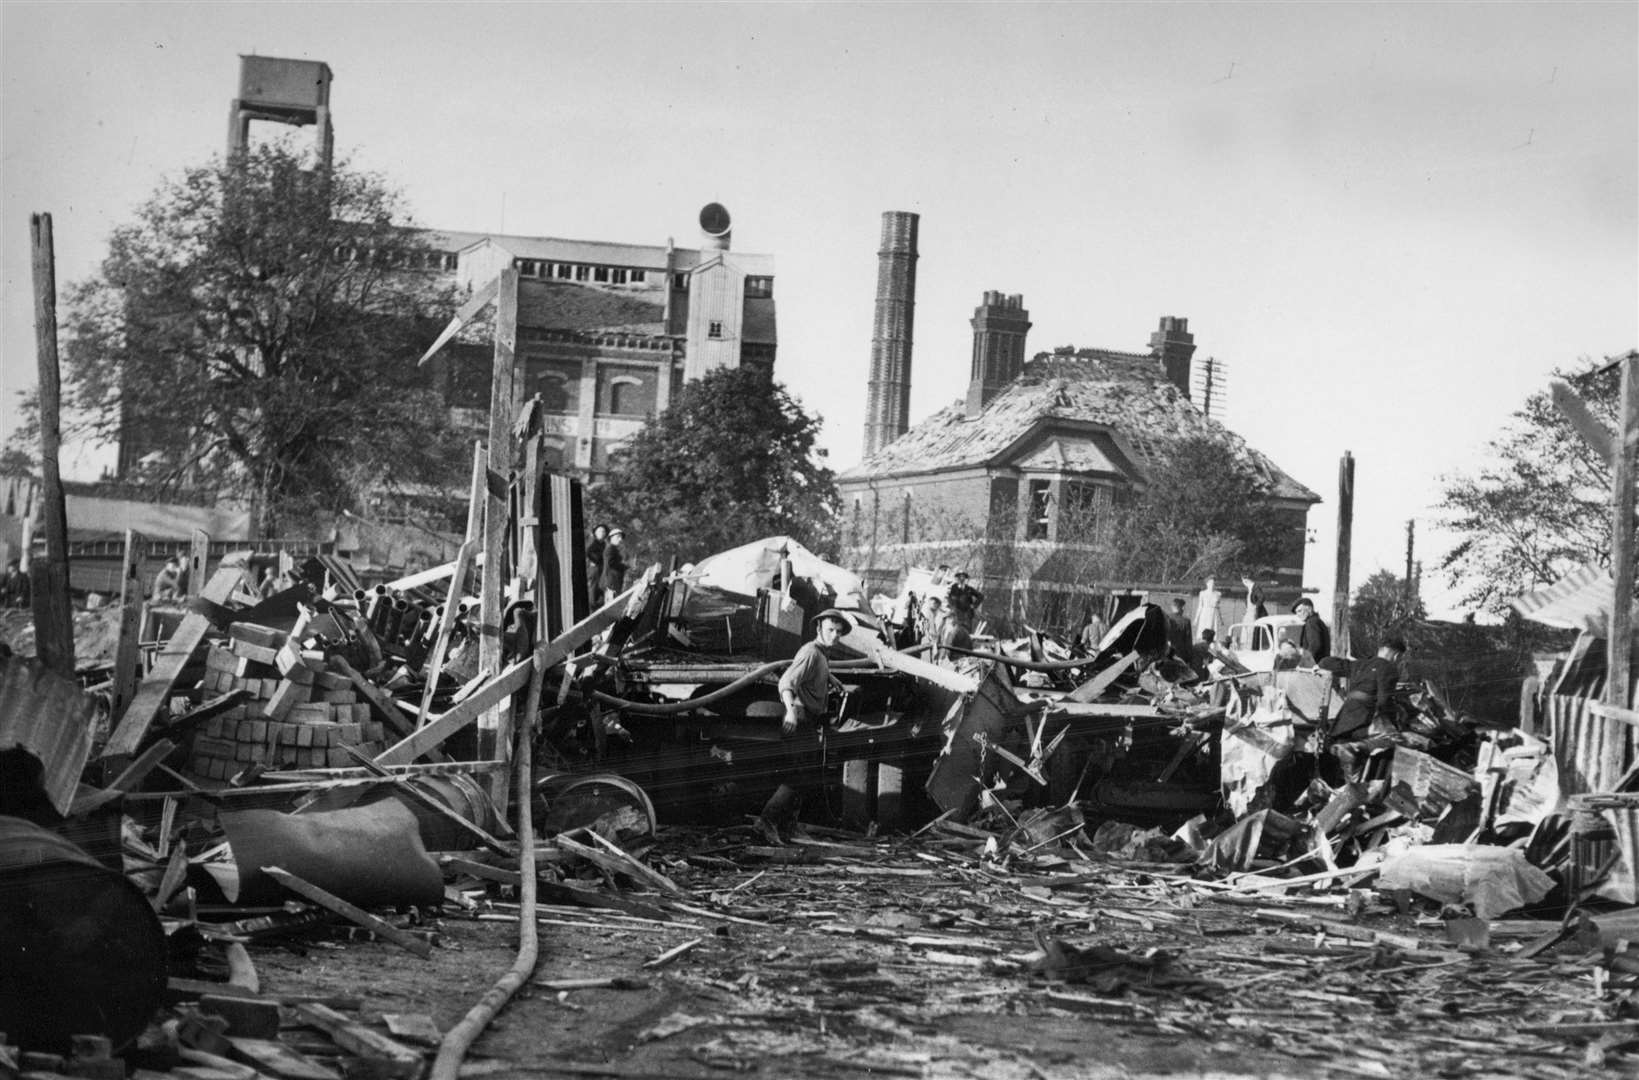 Beaver Road School was destroyed in the raid. Credit: Steve Salter (1302633)